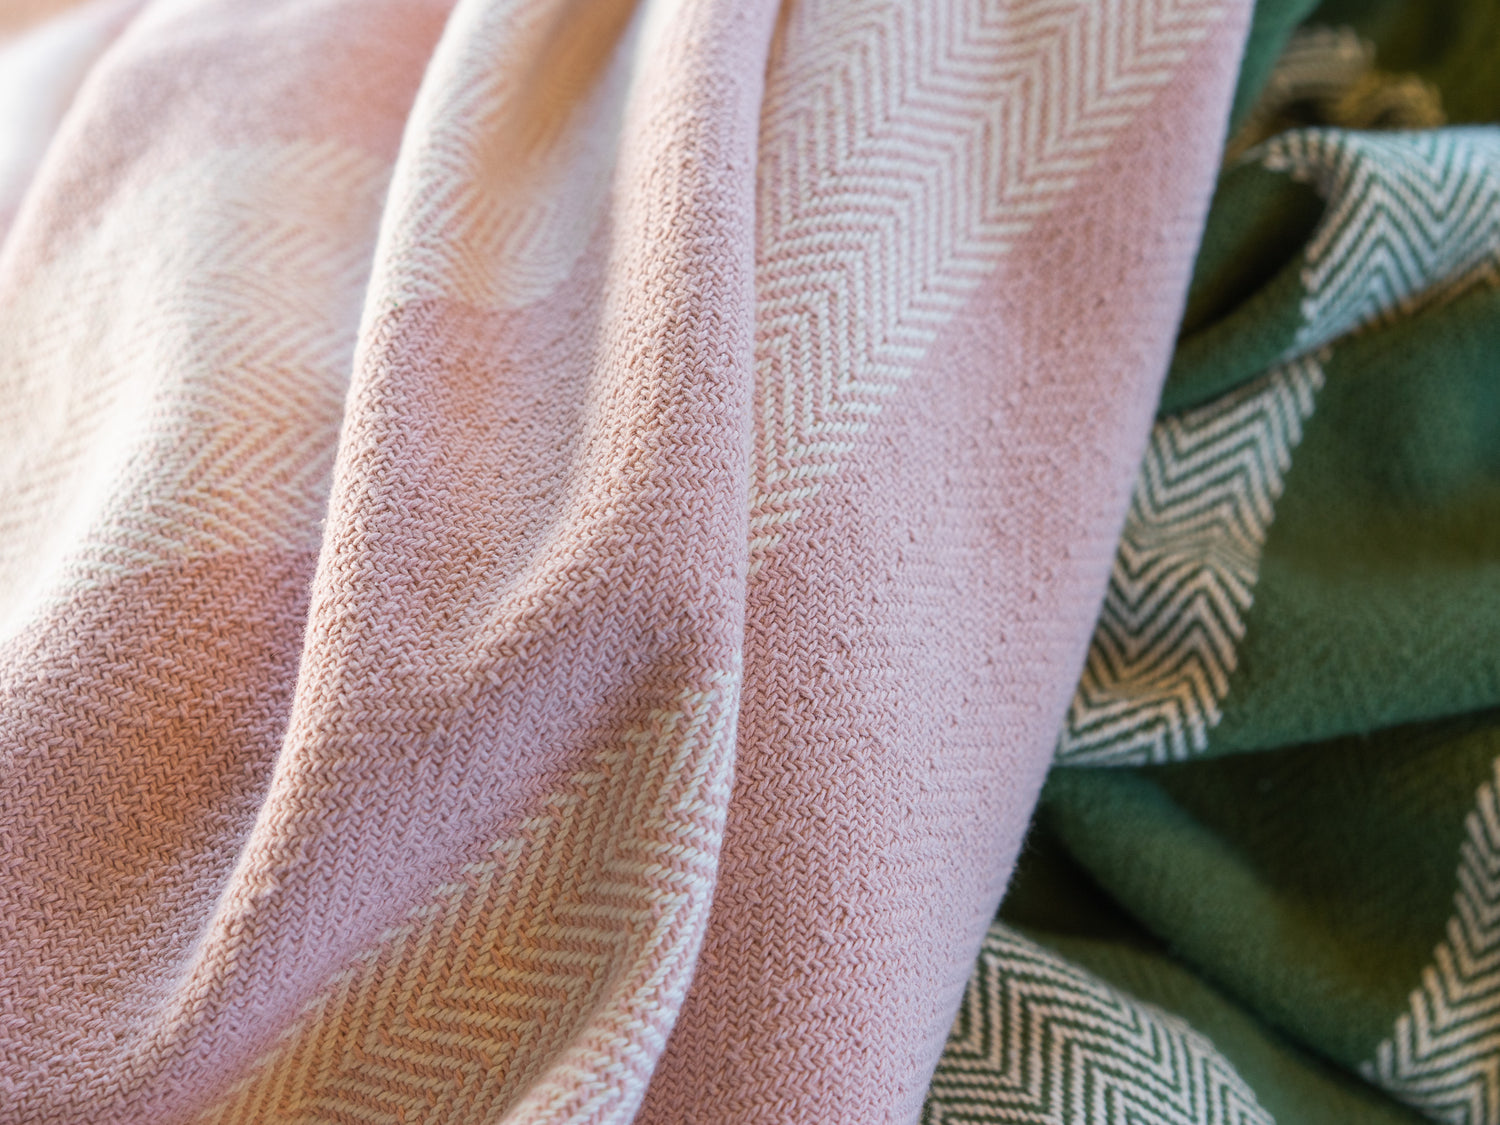 Cozy Organic Patterned Blanket - Magnolia Organics